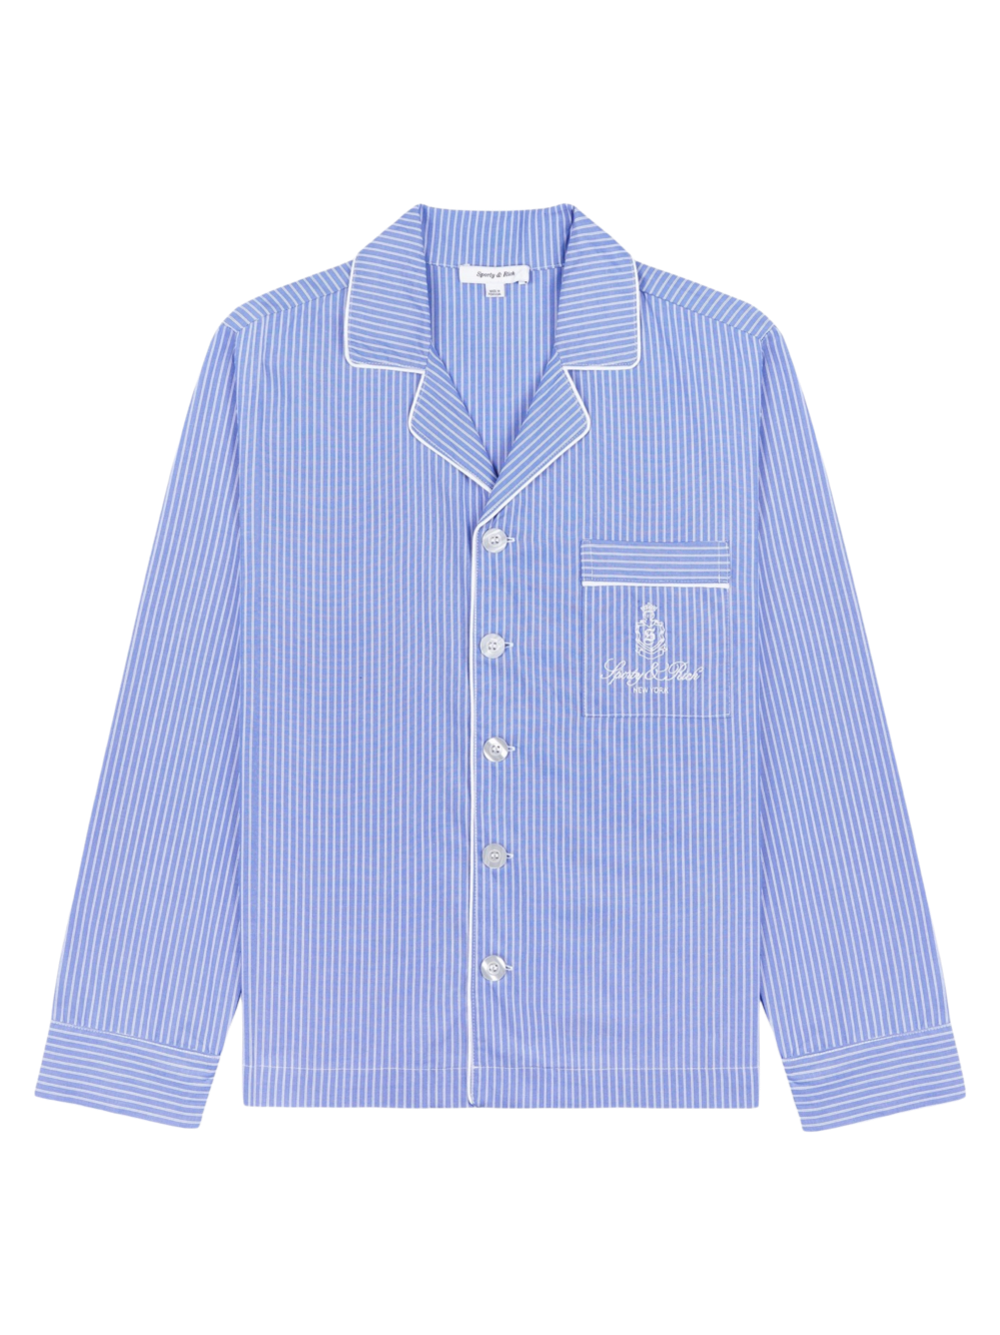 Sporty & Rich Vendome Pyjama Blue Striped Shirt